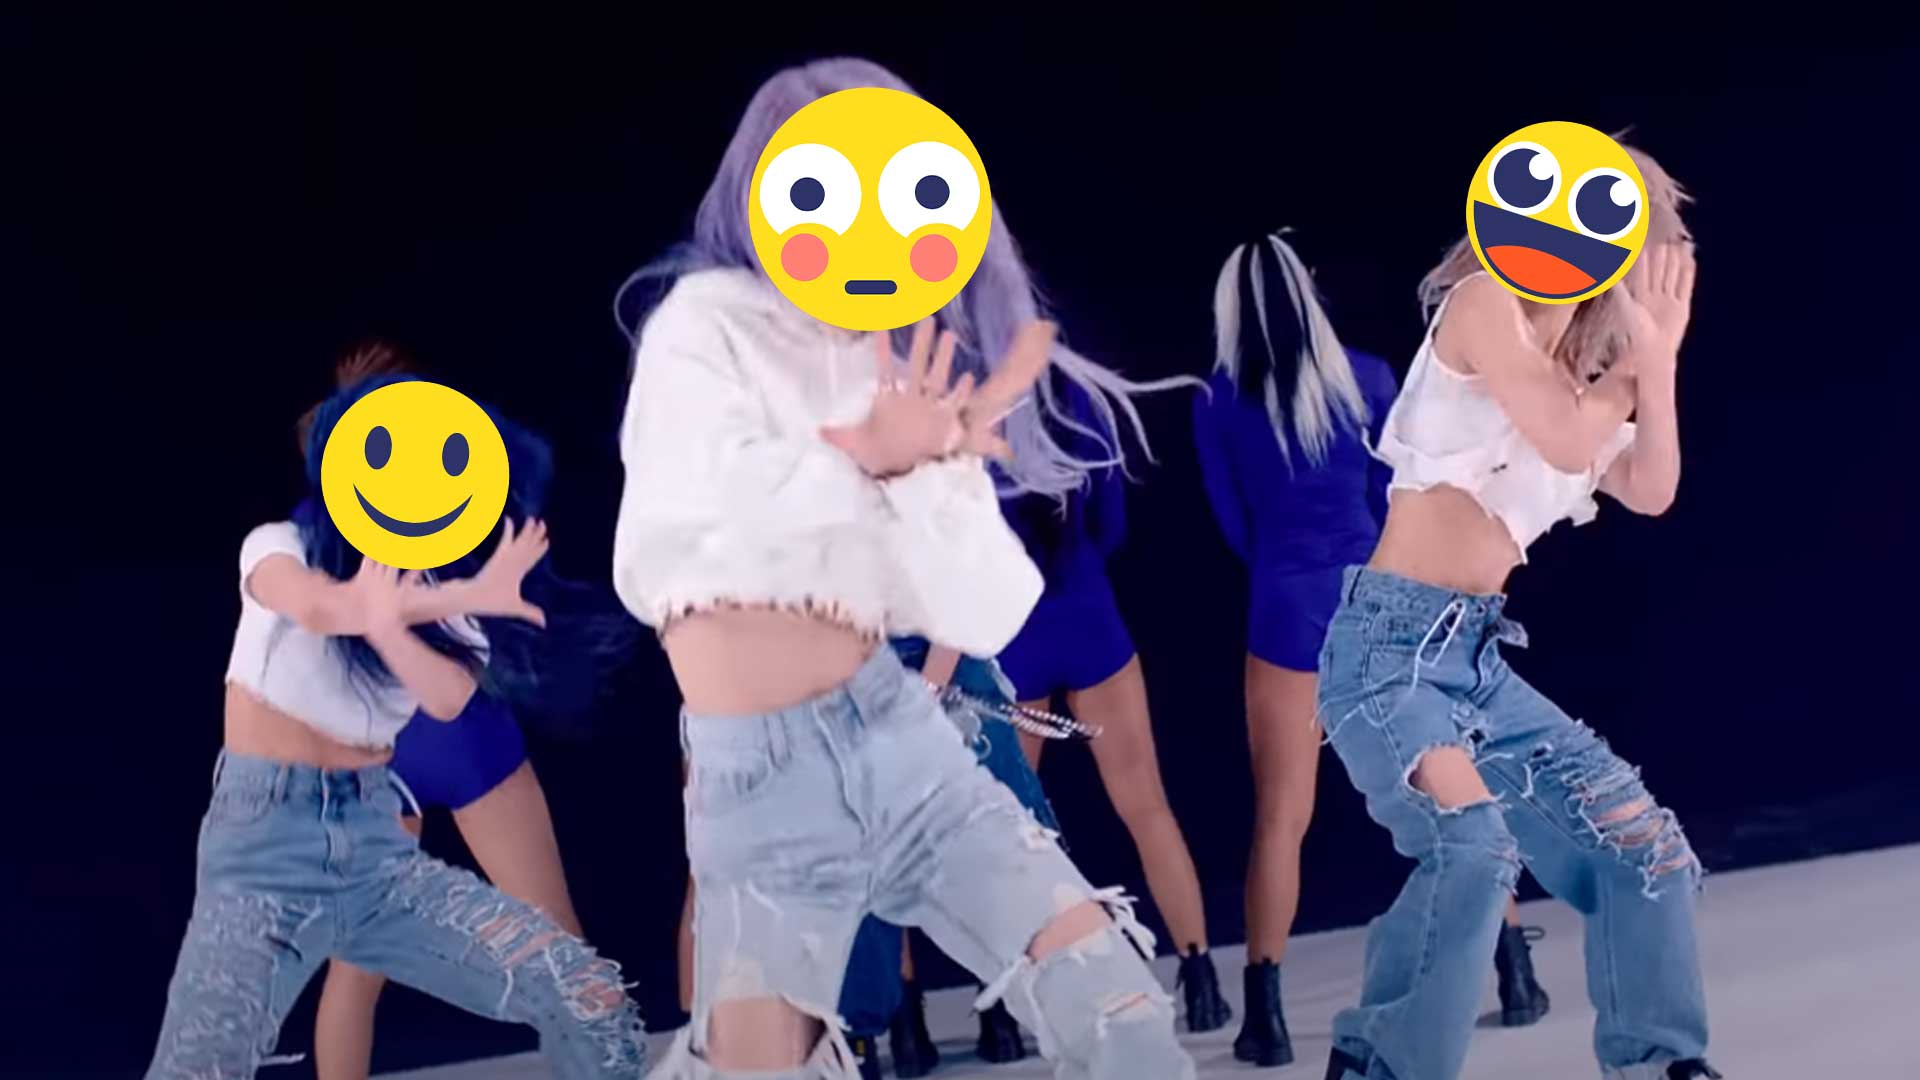 A K-pop group disguised by emojis